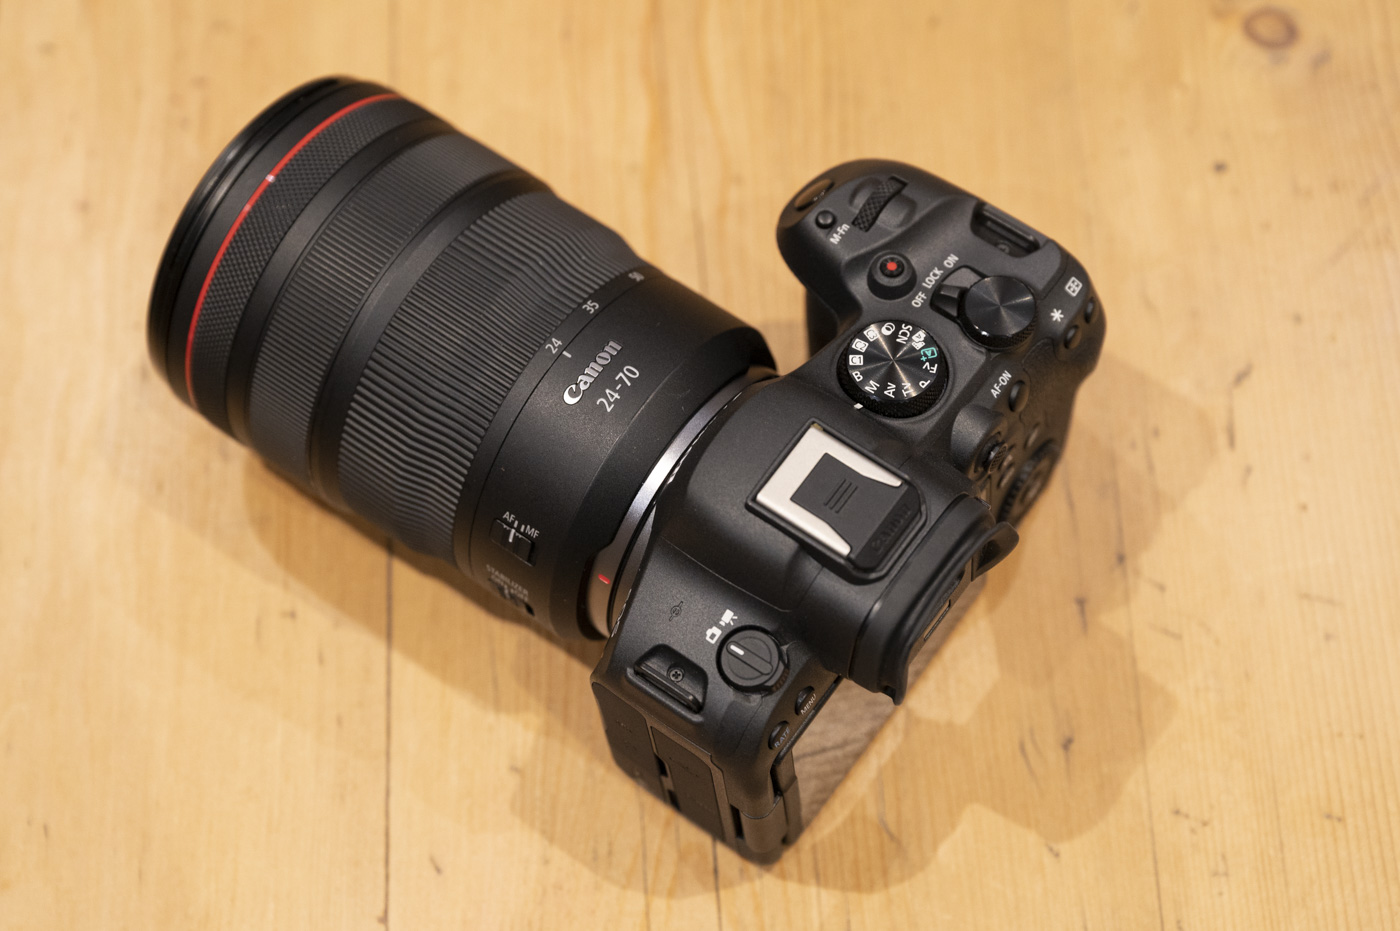 Phototrend prise en main Canon EOS R6 Mark II